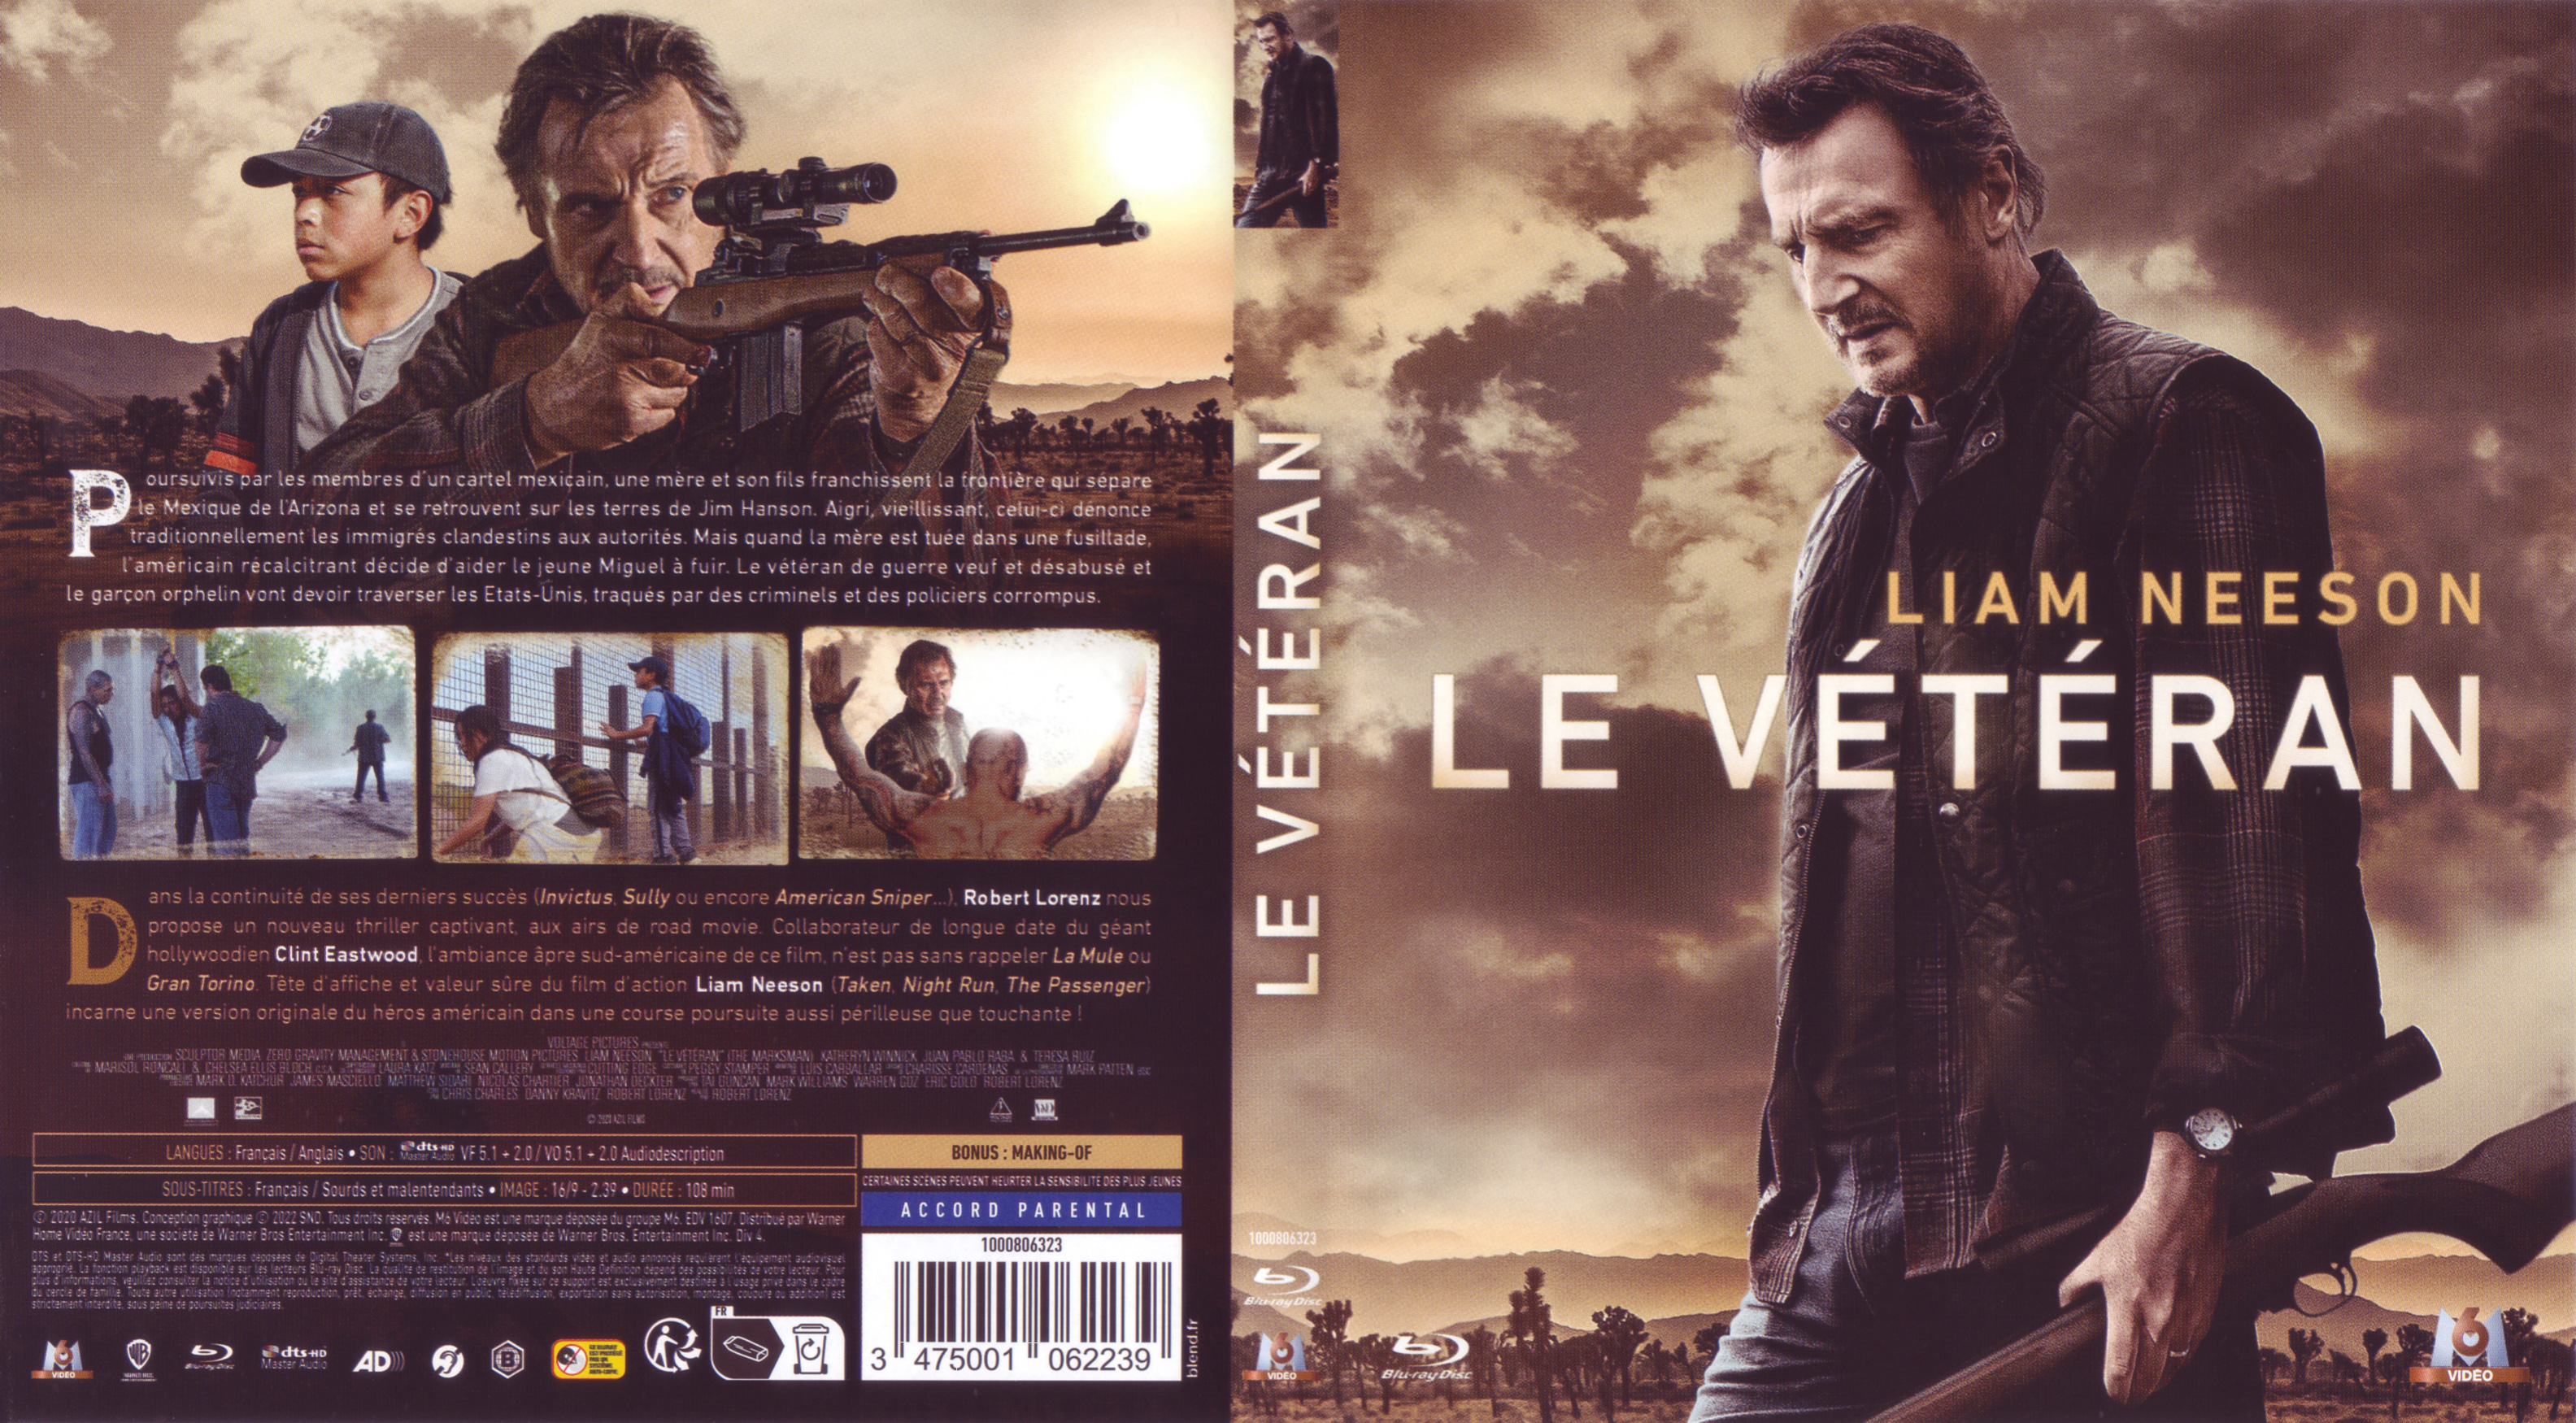 Jaquette DVD Le vtran 2021 (BLU-RAY)  v2